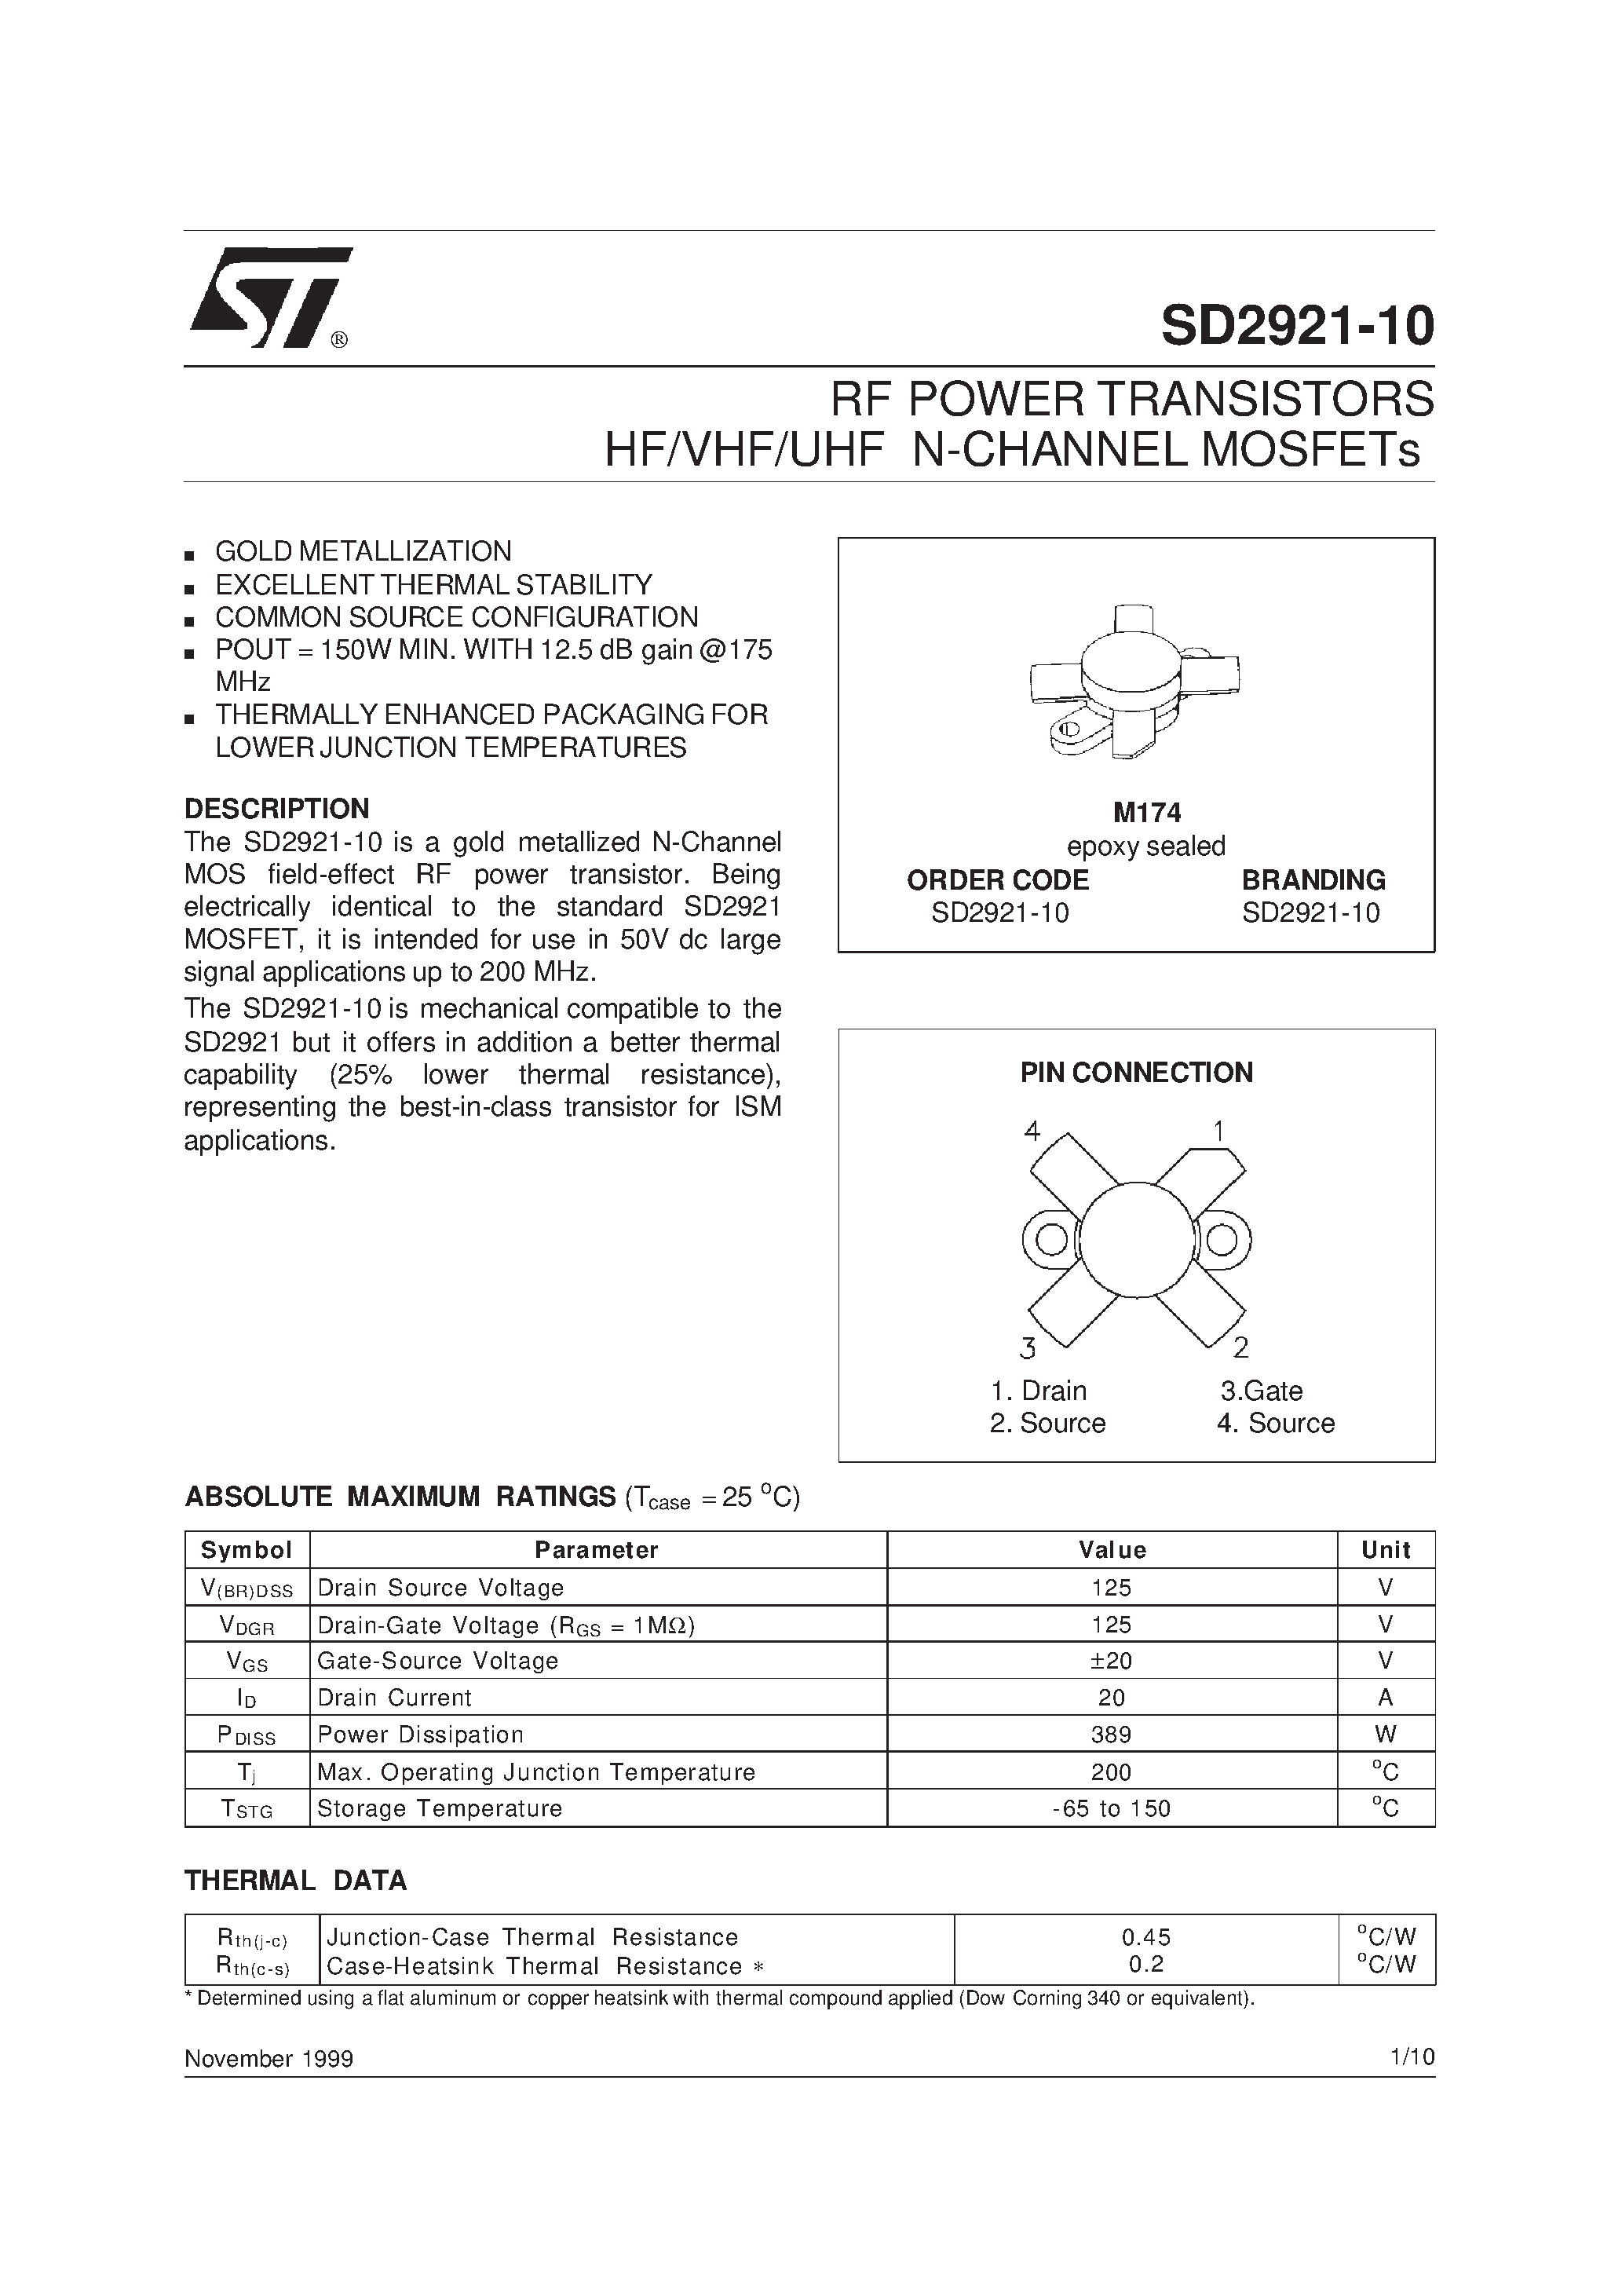 Datasheet SD2921-10 - RF POWER TRANSISTORS HF/VHF/UHF N-CHANNEL MOSFETs page 1